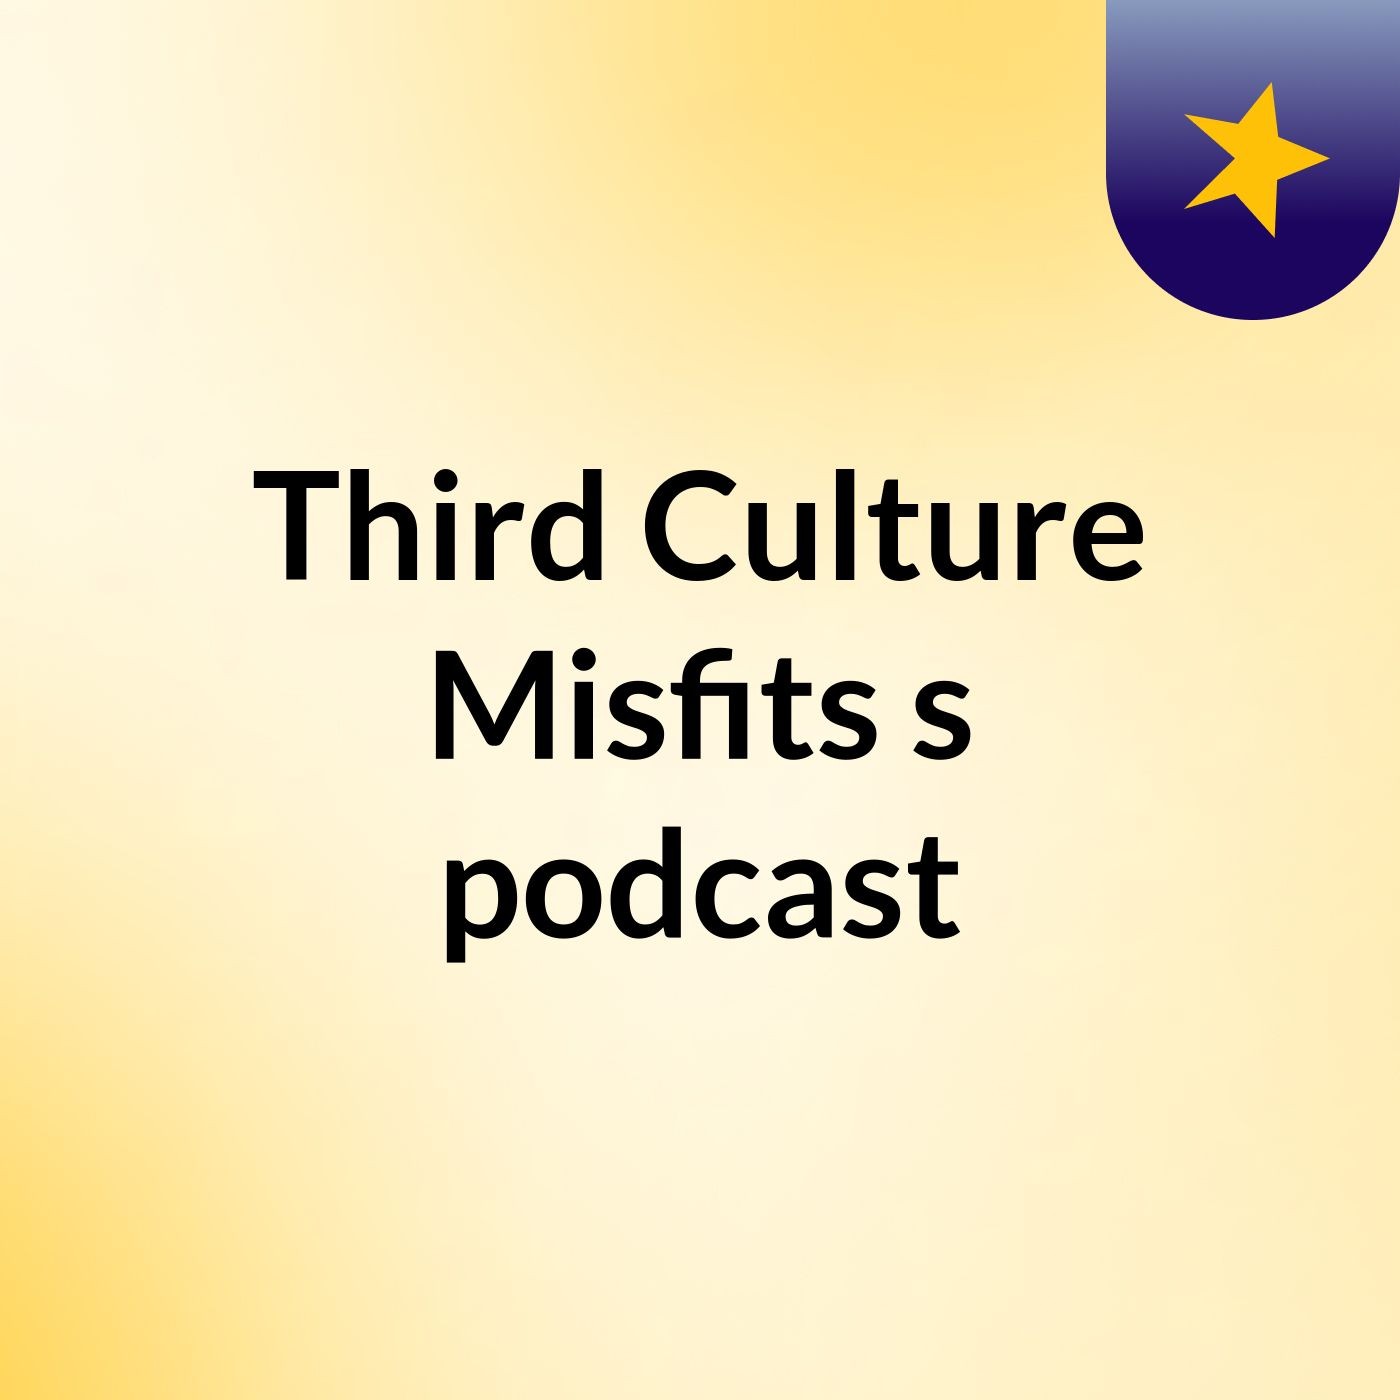 Third Culture Misfits's podcast